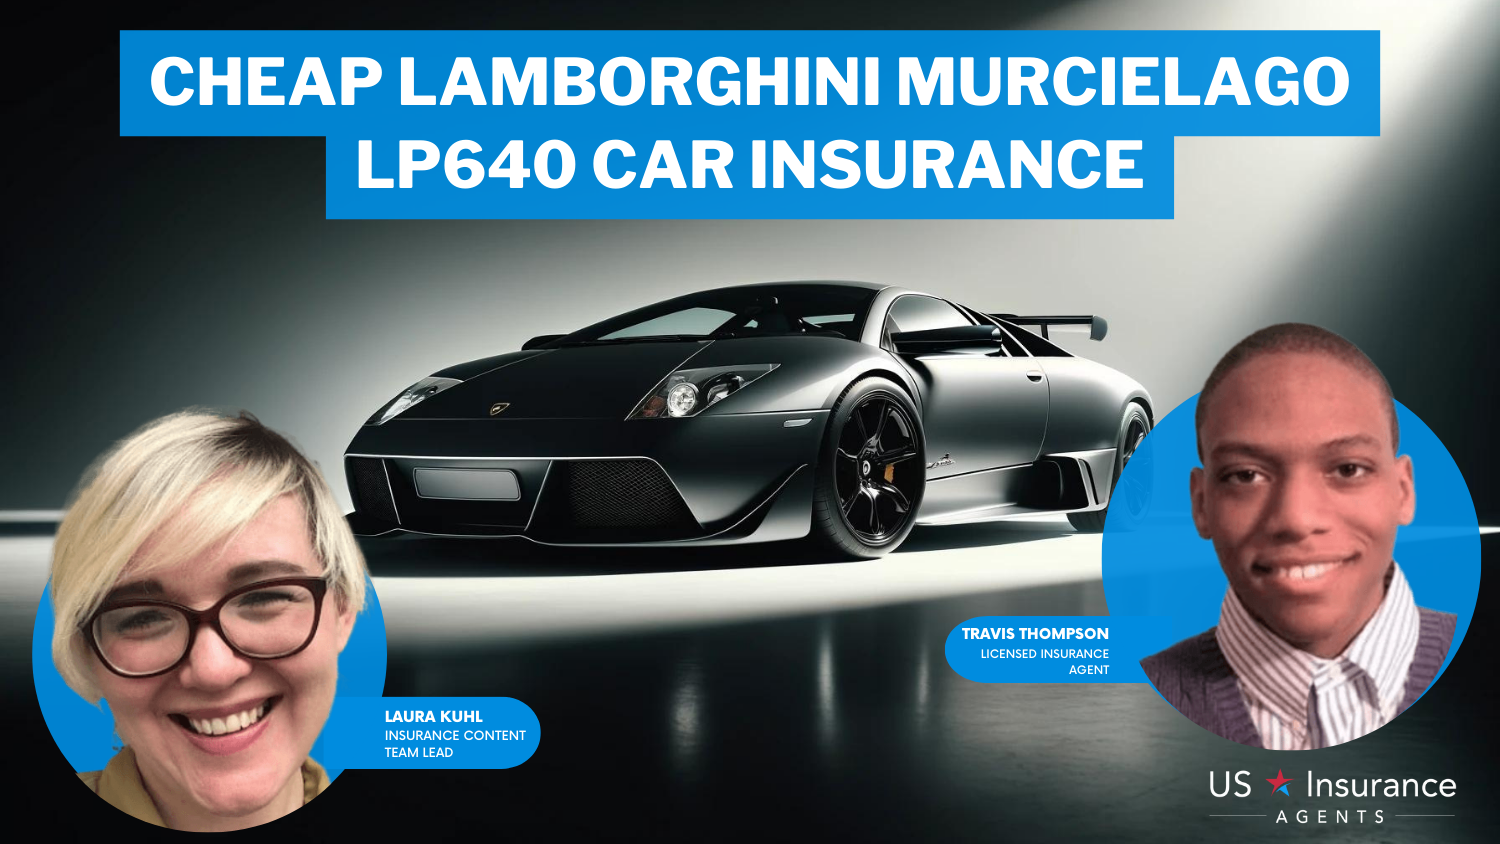 Cheap Lamborghini Murcielago: Safeco, Farmers, and Erie